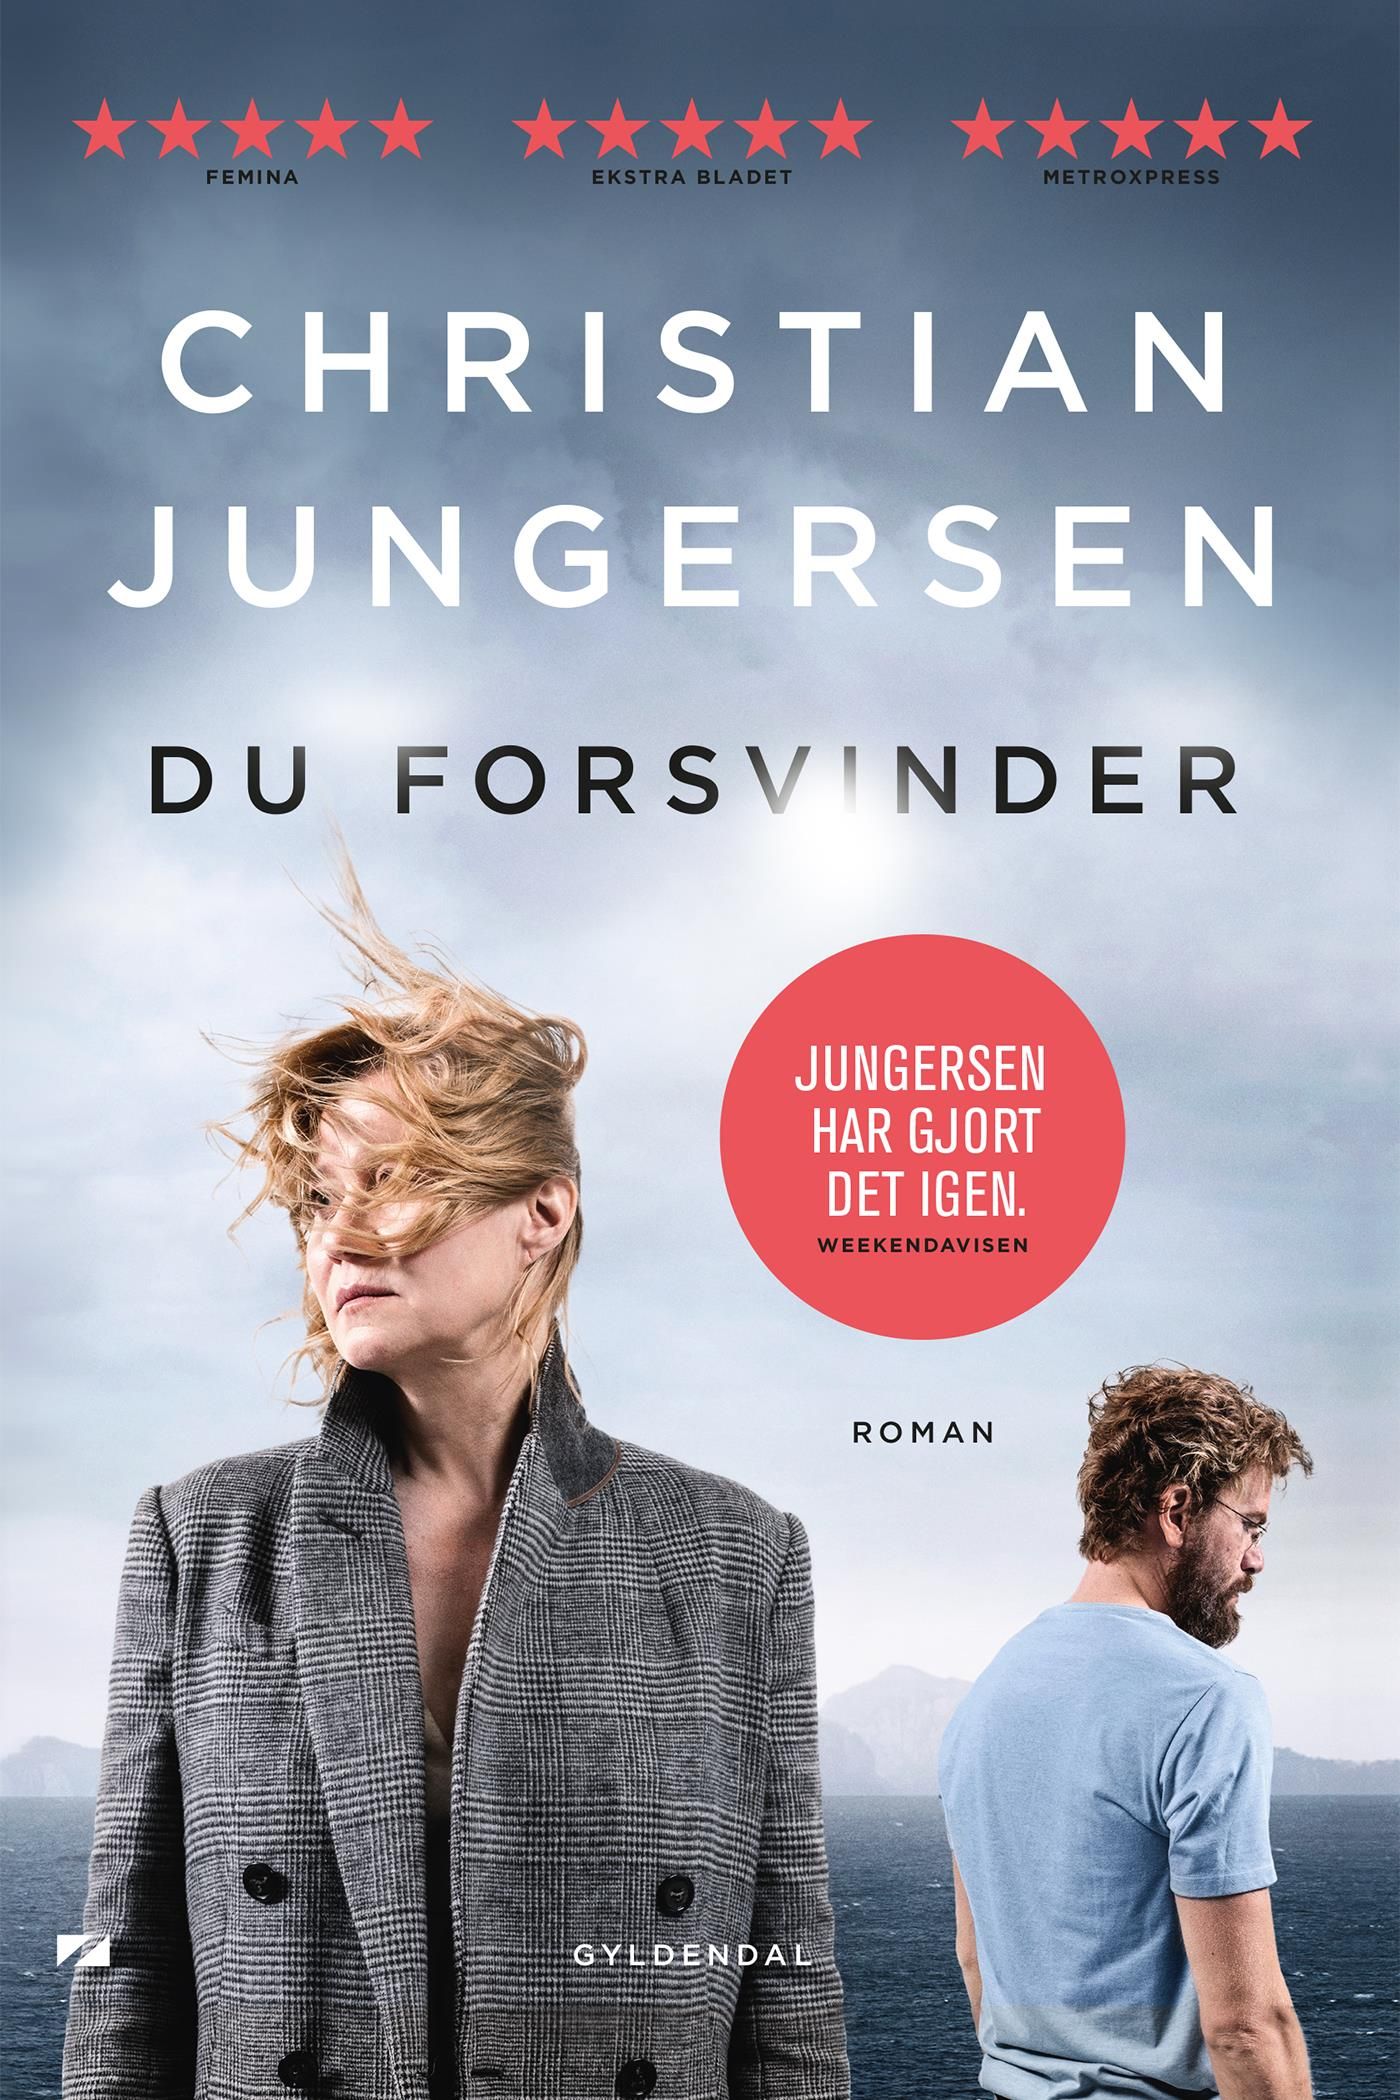 Du forsvinder, eBook by Christian Jungersen